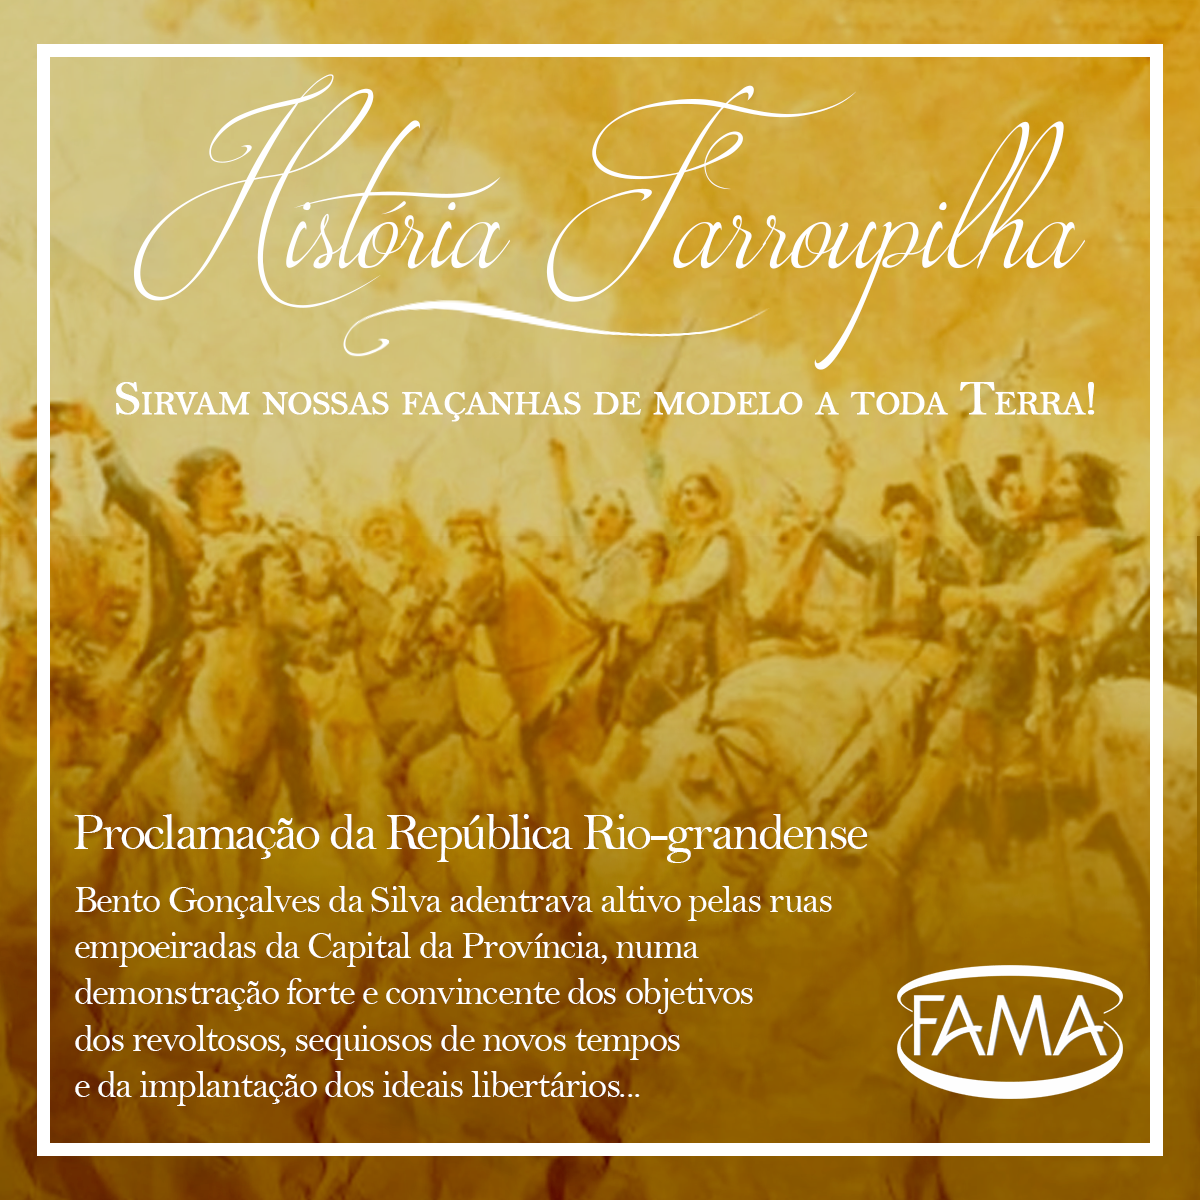 11 de setembro de 1836: proclamada a República Rio-Grandense - Portal Roda  de Cuia